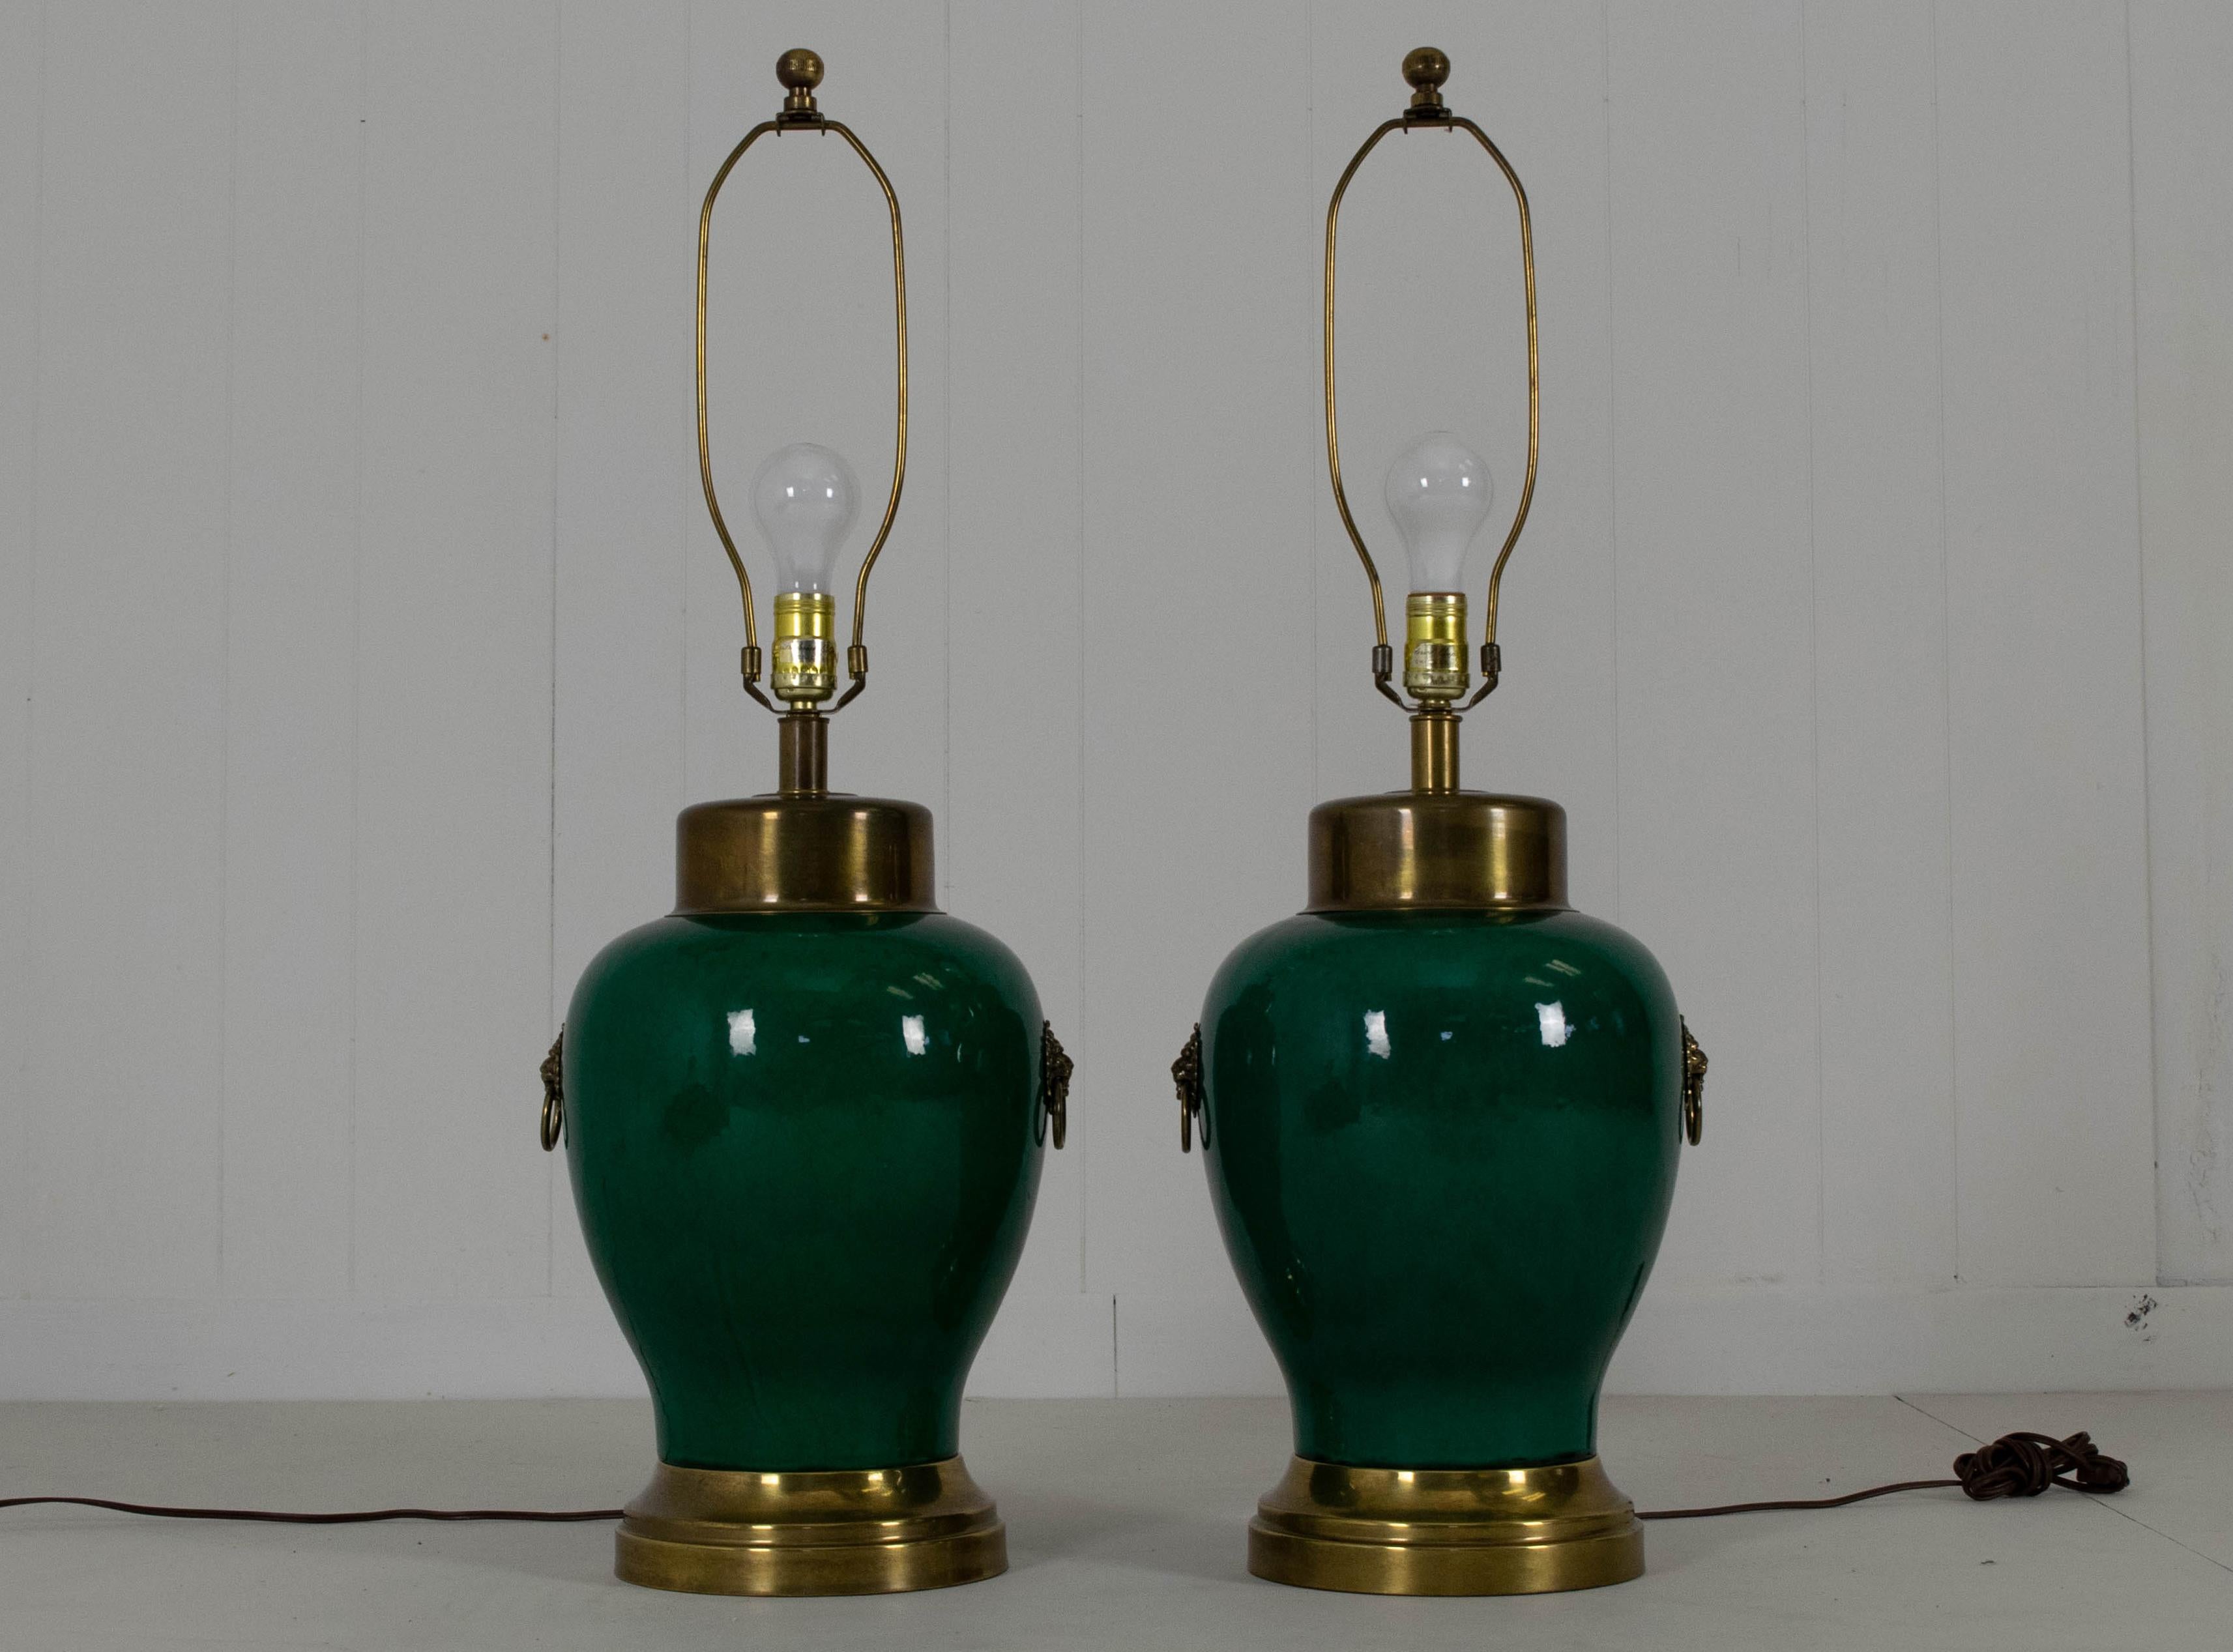 Frederick Cooper, USA circa 1955
Ceramic table lamp pair
Measures: 10